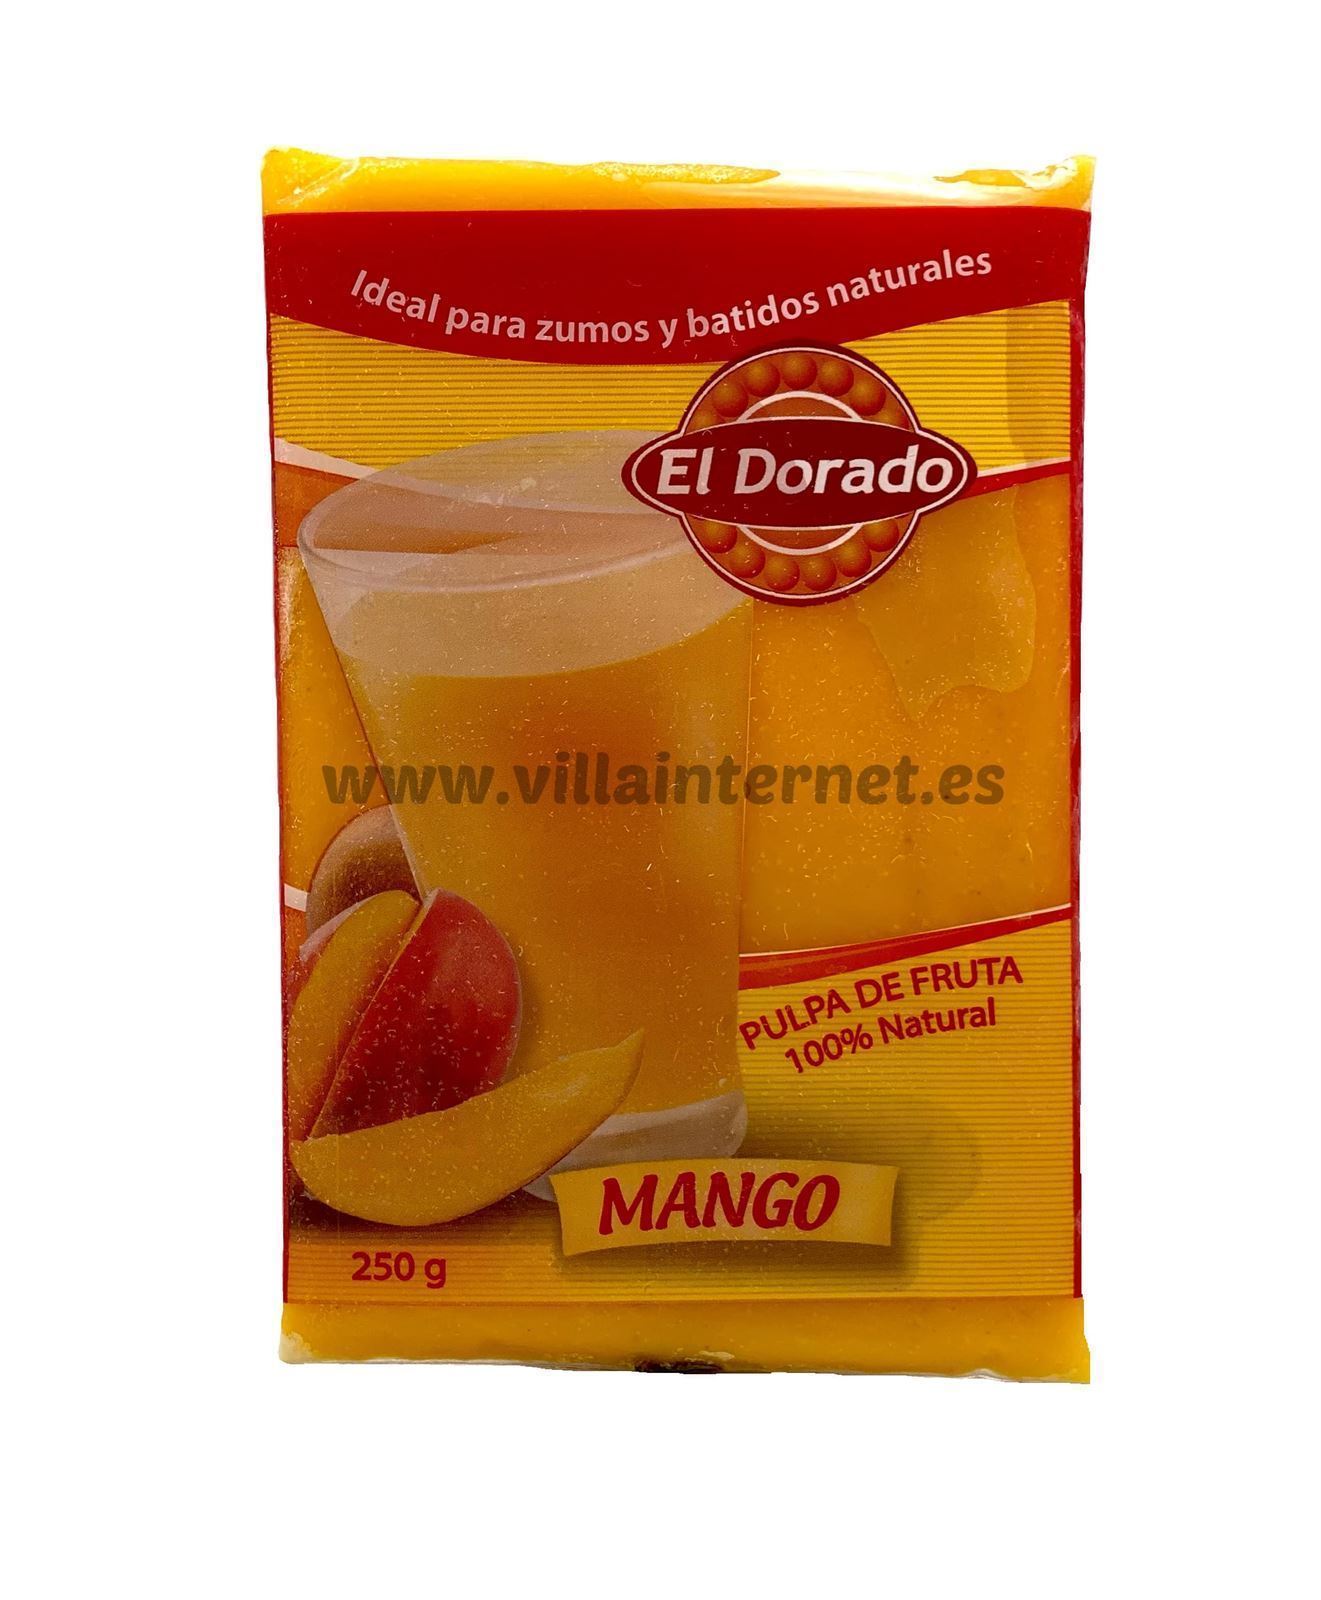 Pulpa de mango 250g - Imagen 1